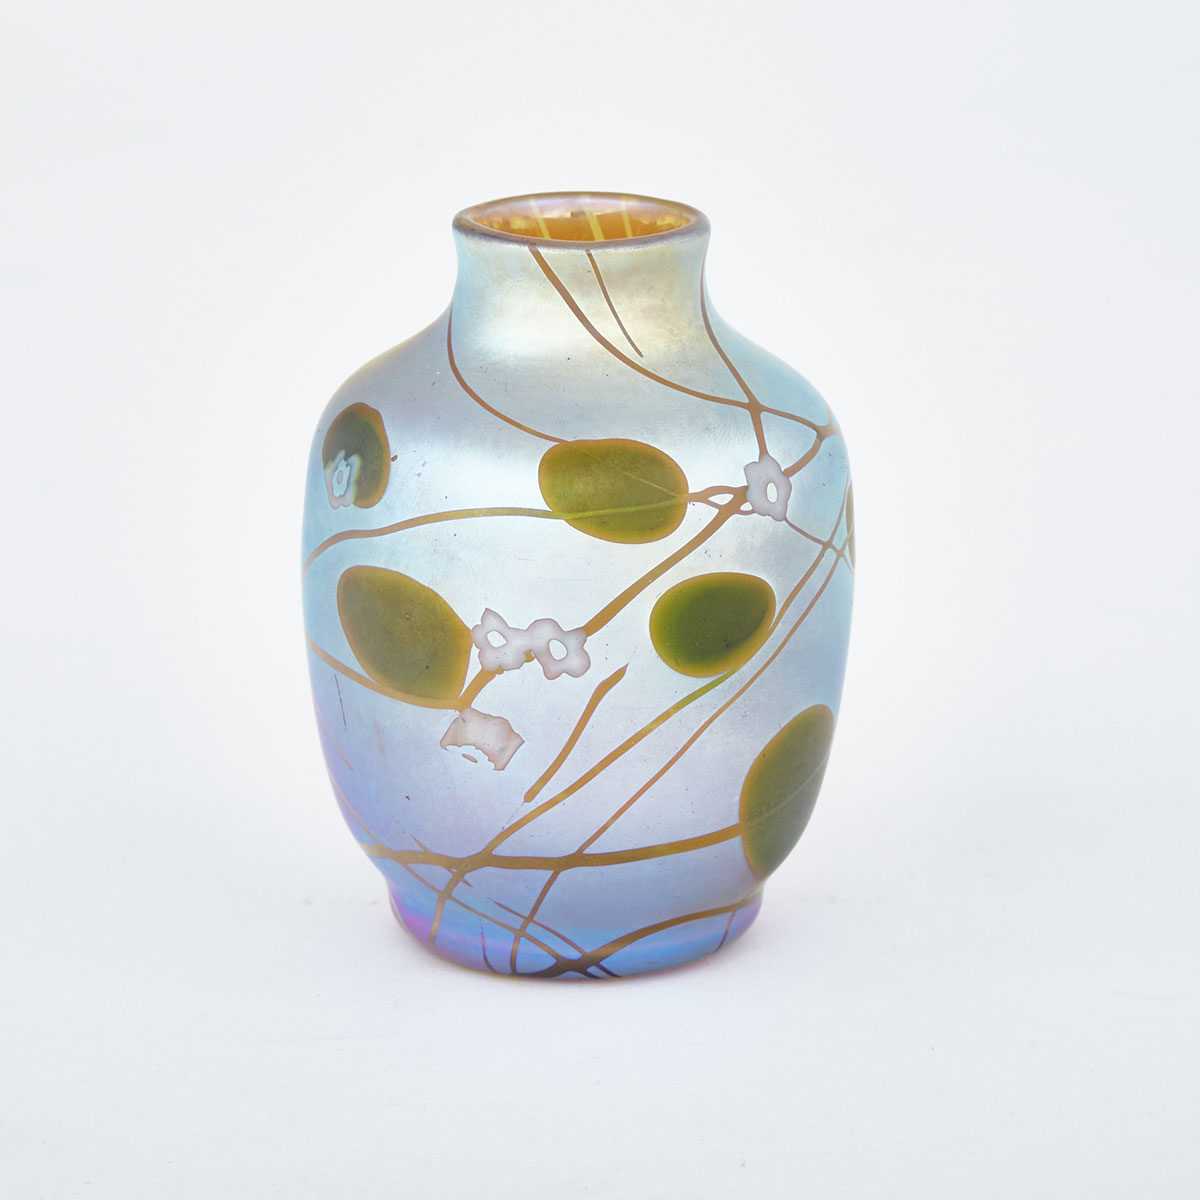 Steuben ‘Aurene’ Decorated Iridescent Glass Vase, early 20th century